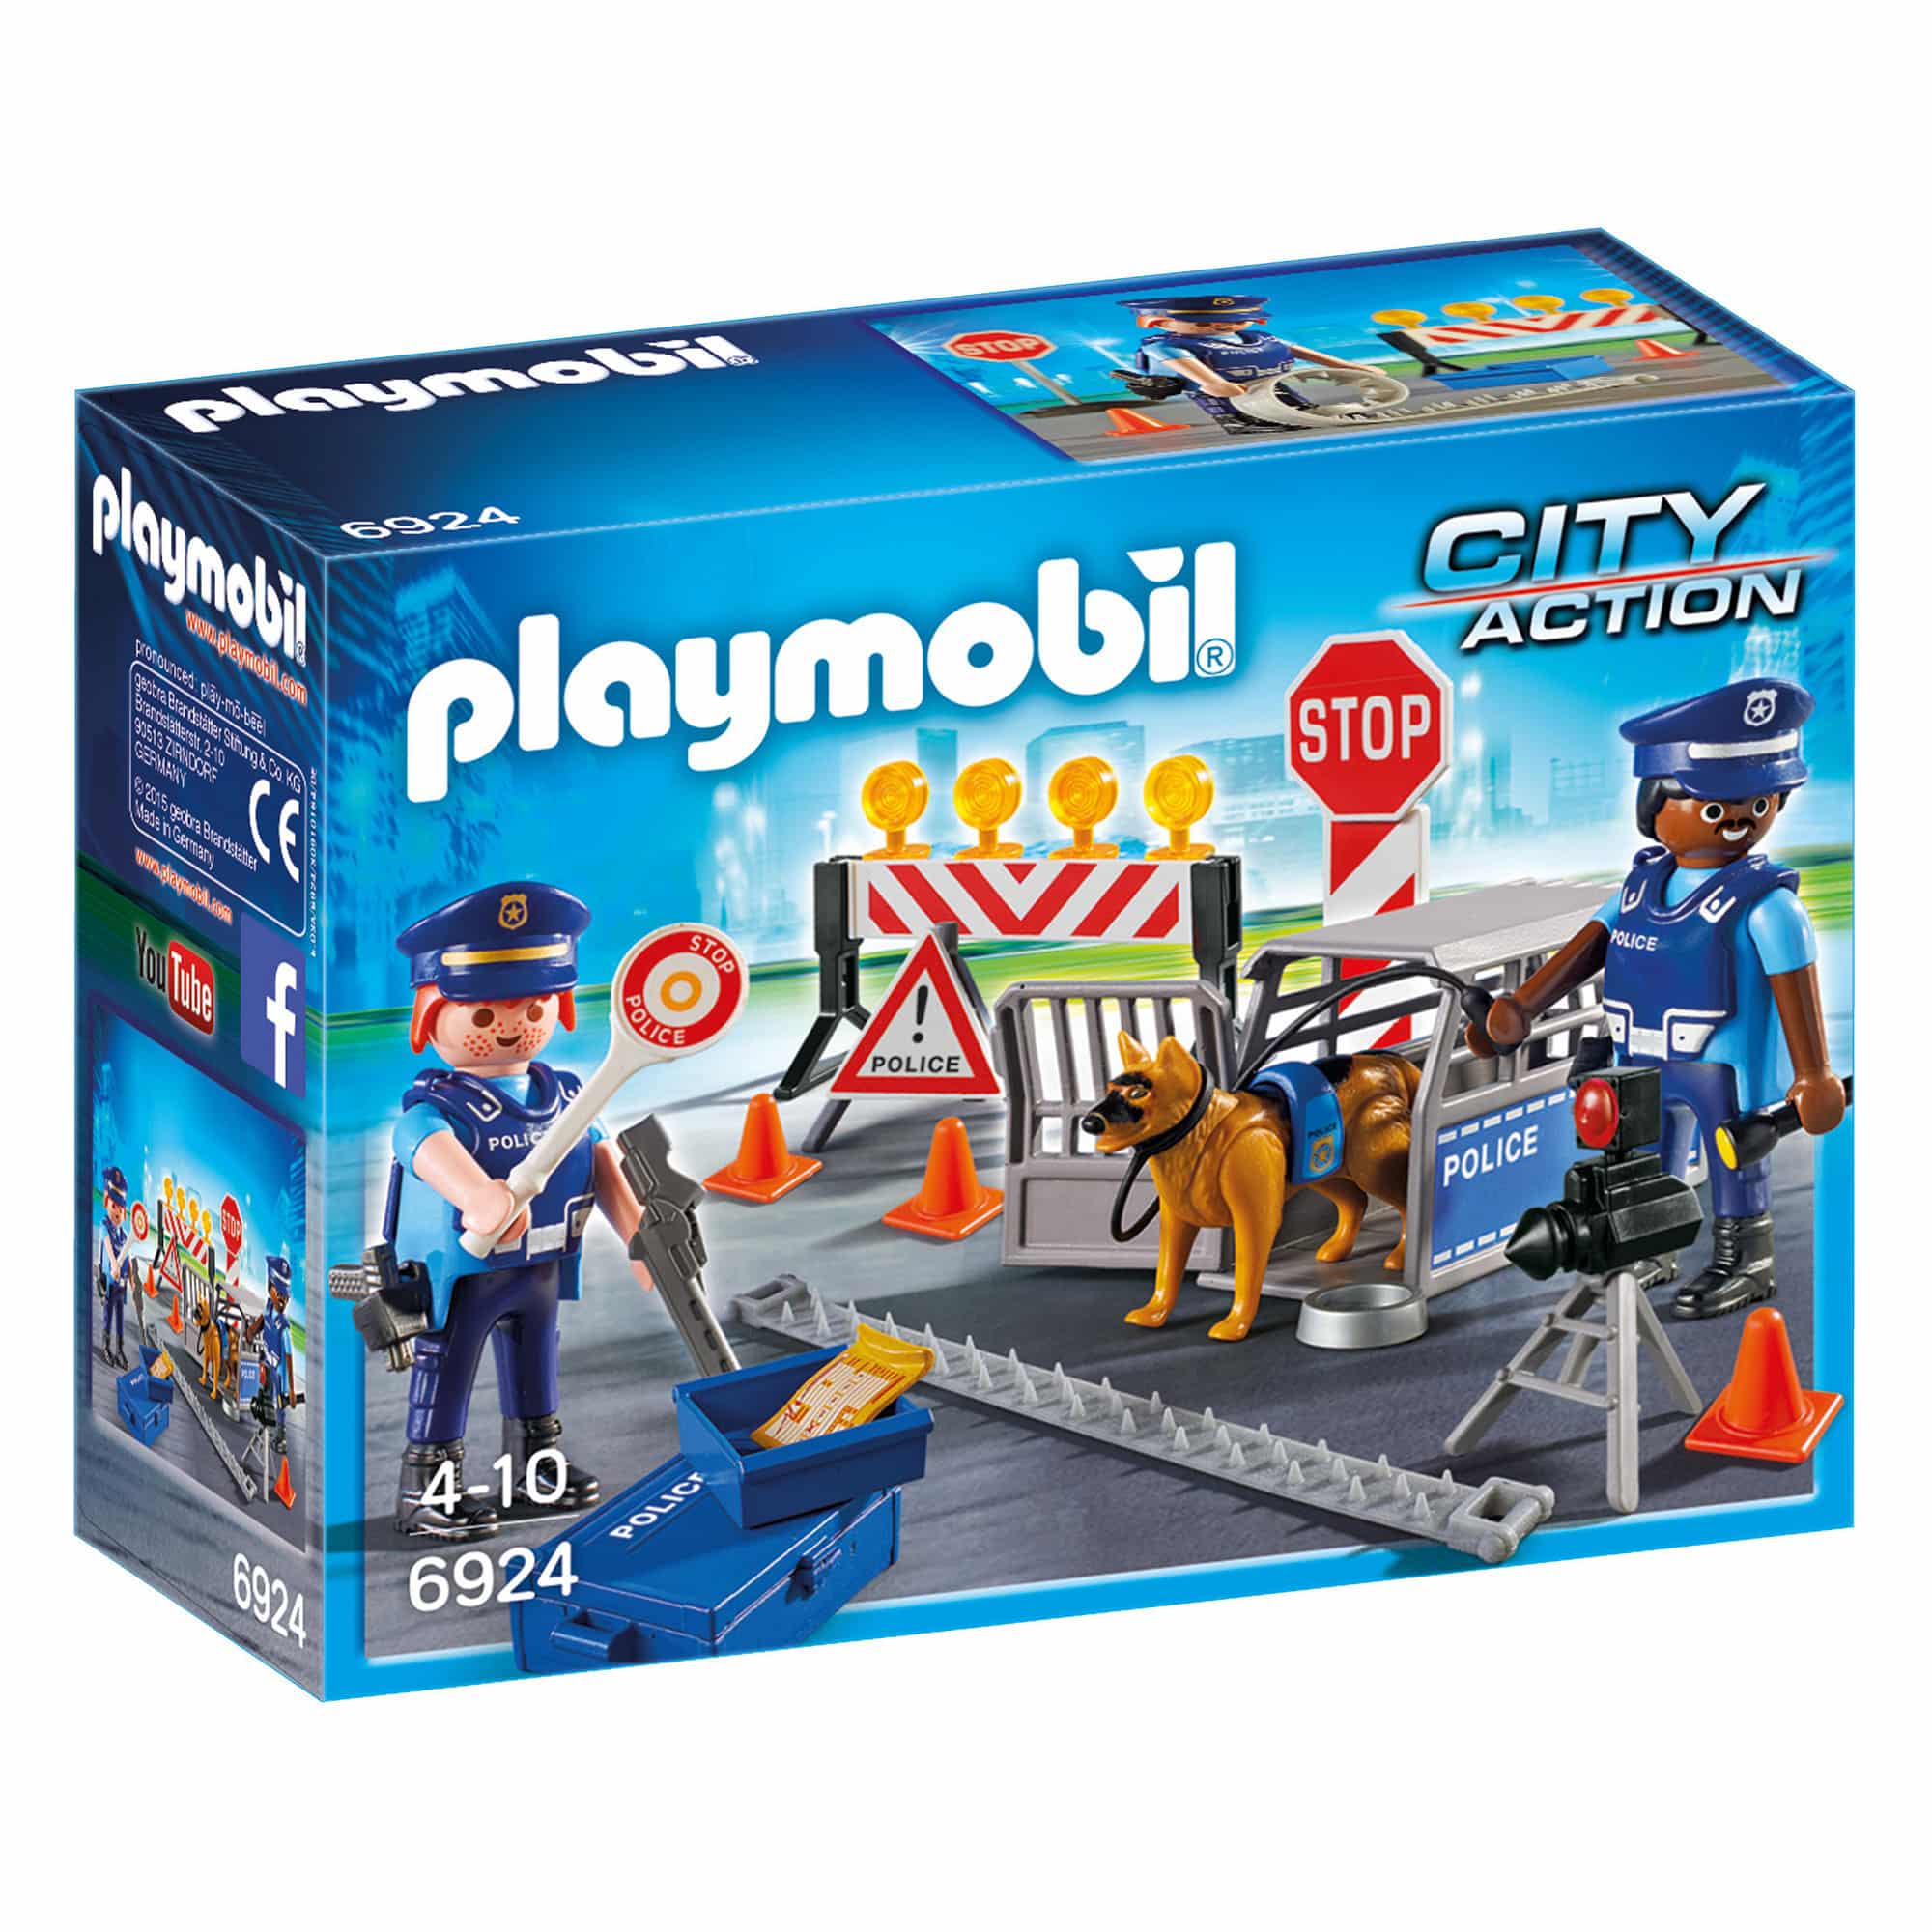 Playmobil - City Action - Police Roadblock